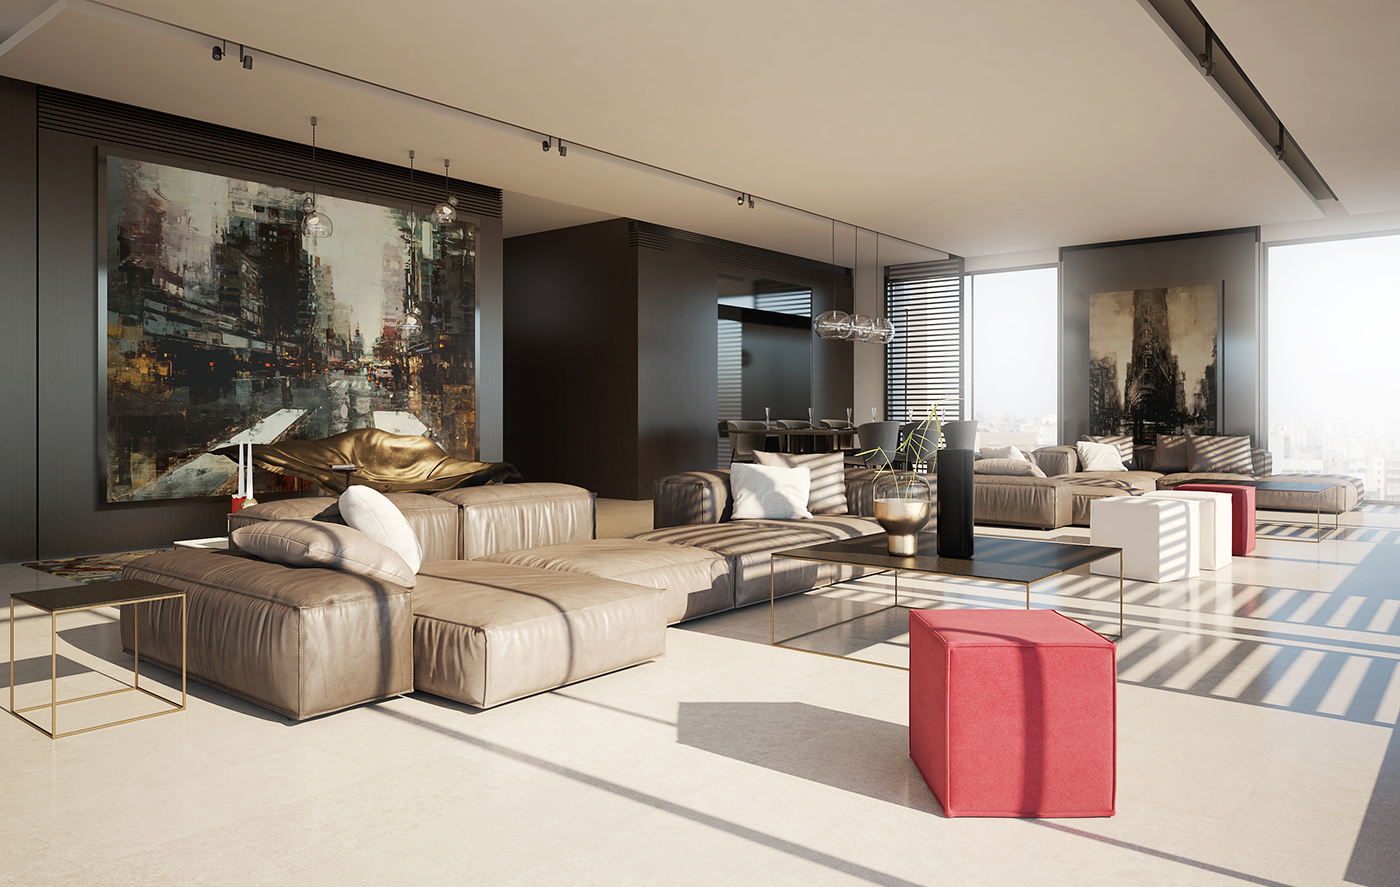 Residence living design lighting 3dsmax 3D visualization materials colors mood